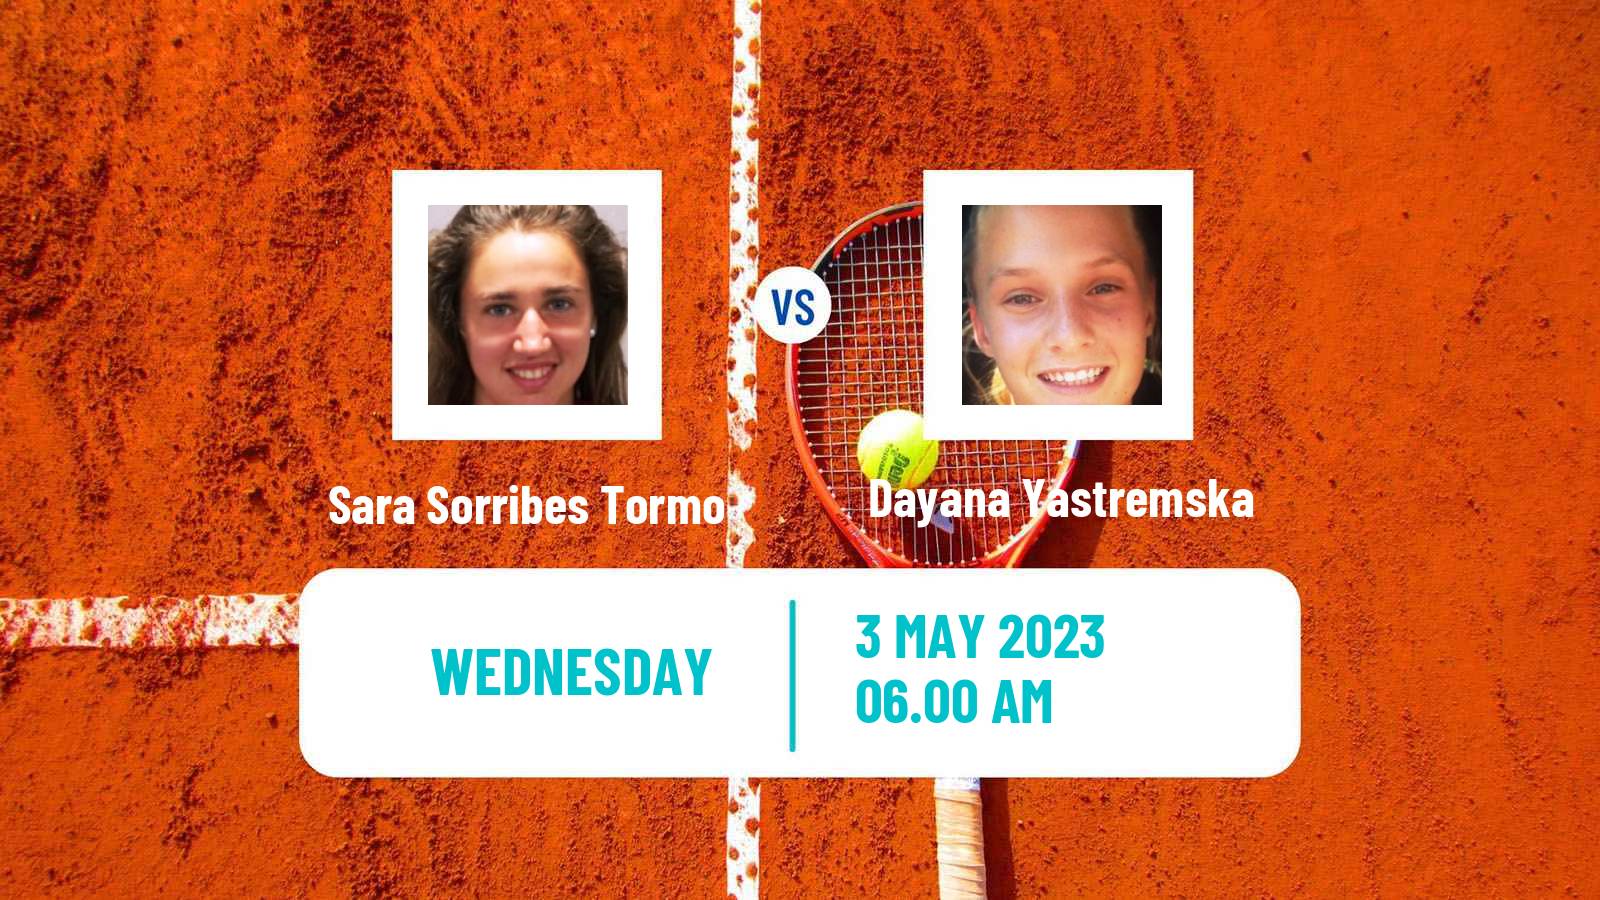 Tennis ATP Challenger Sara Sorribes Tormo - Dayana Yastremska